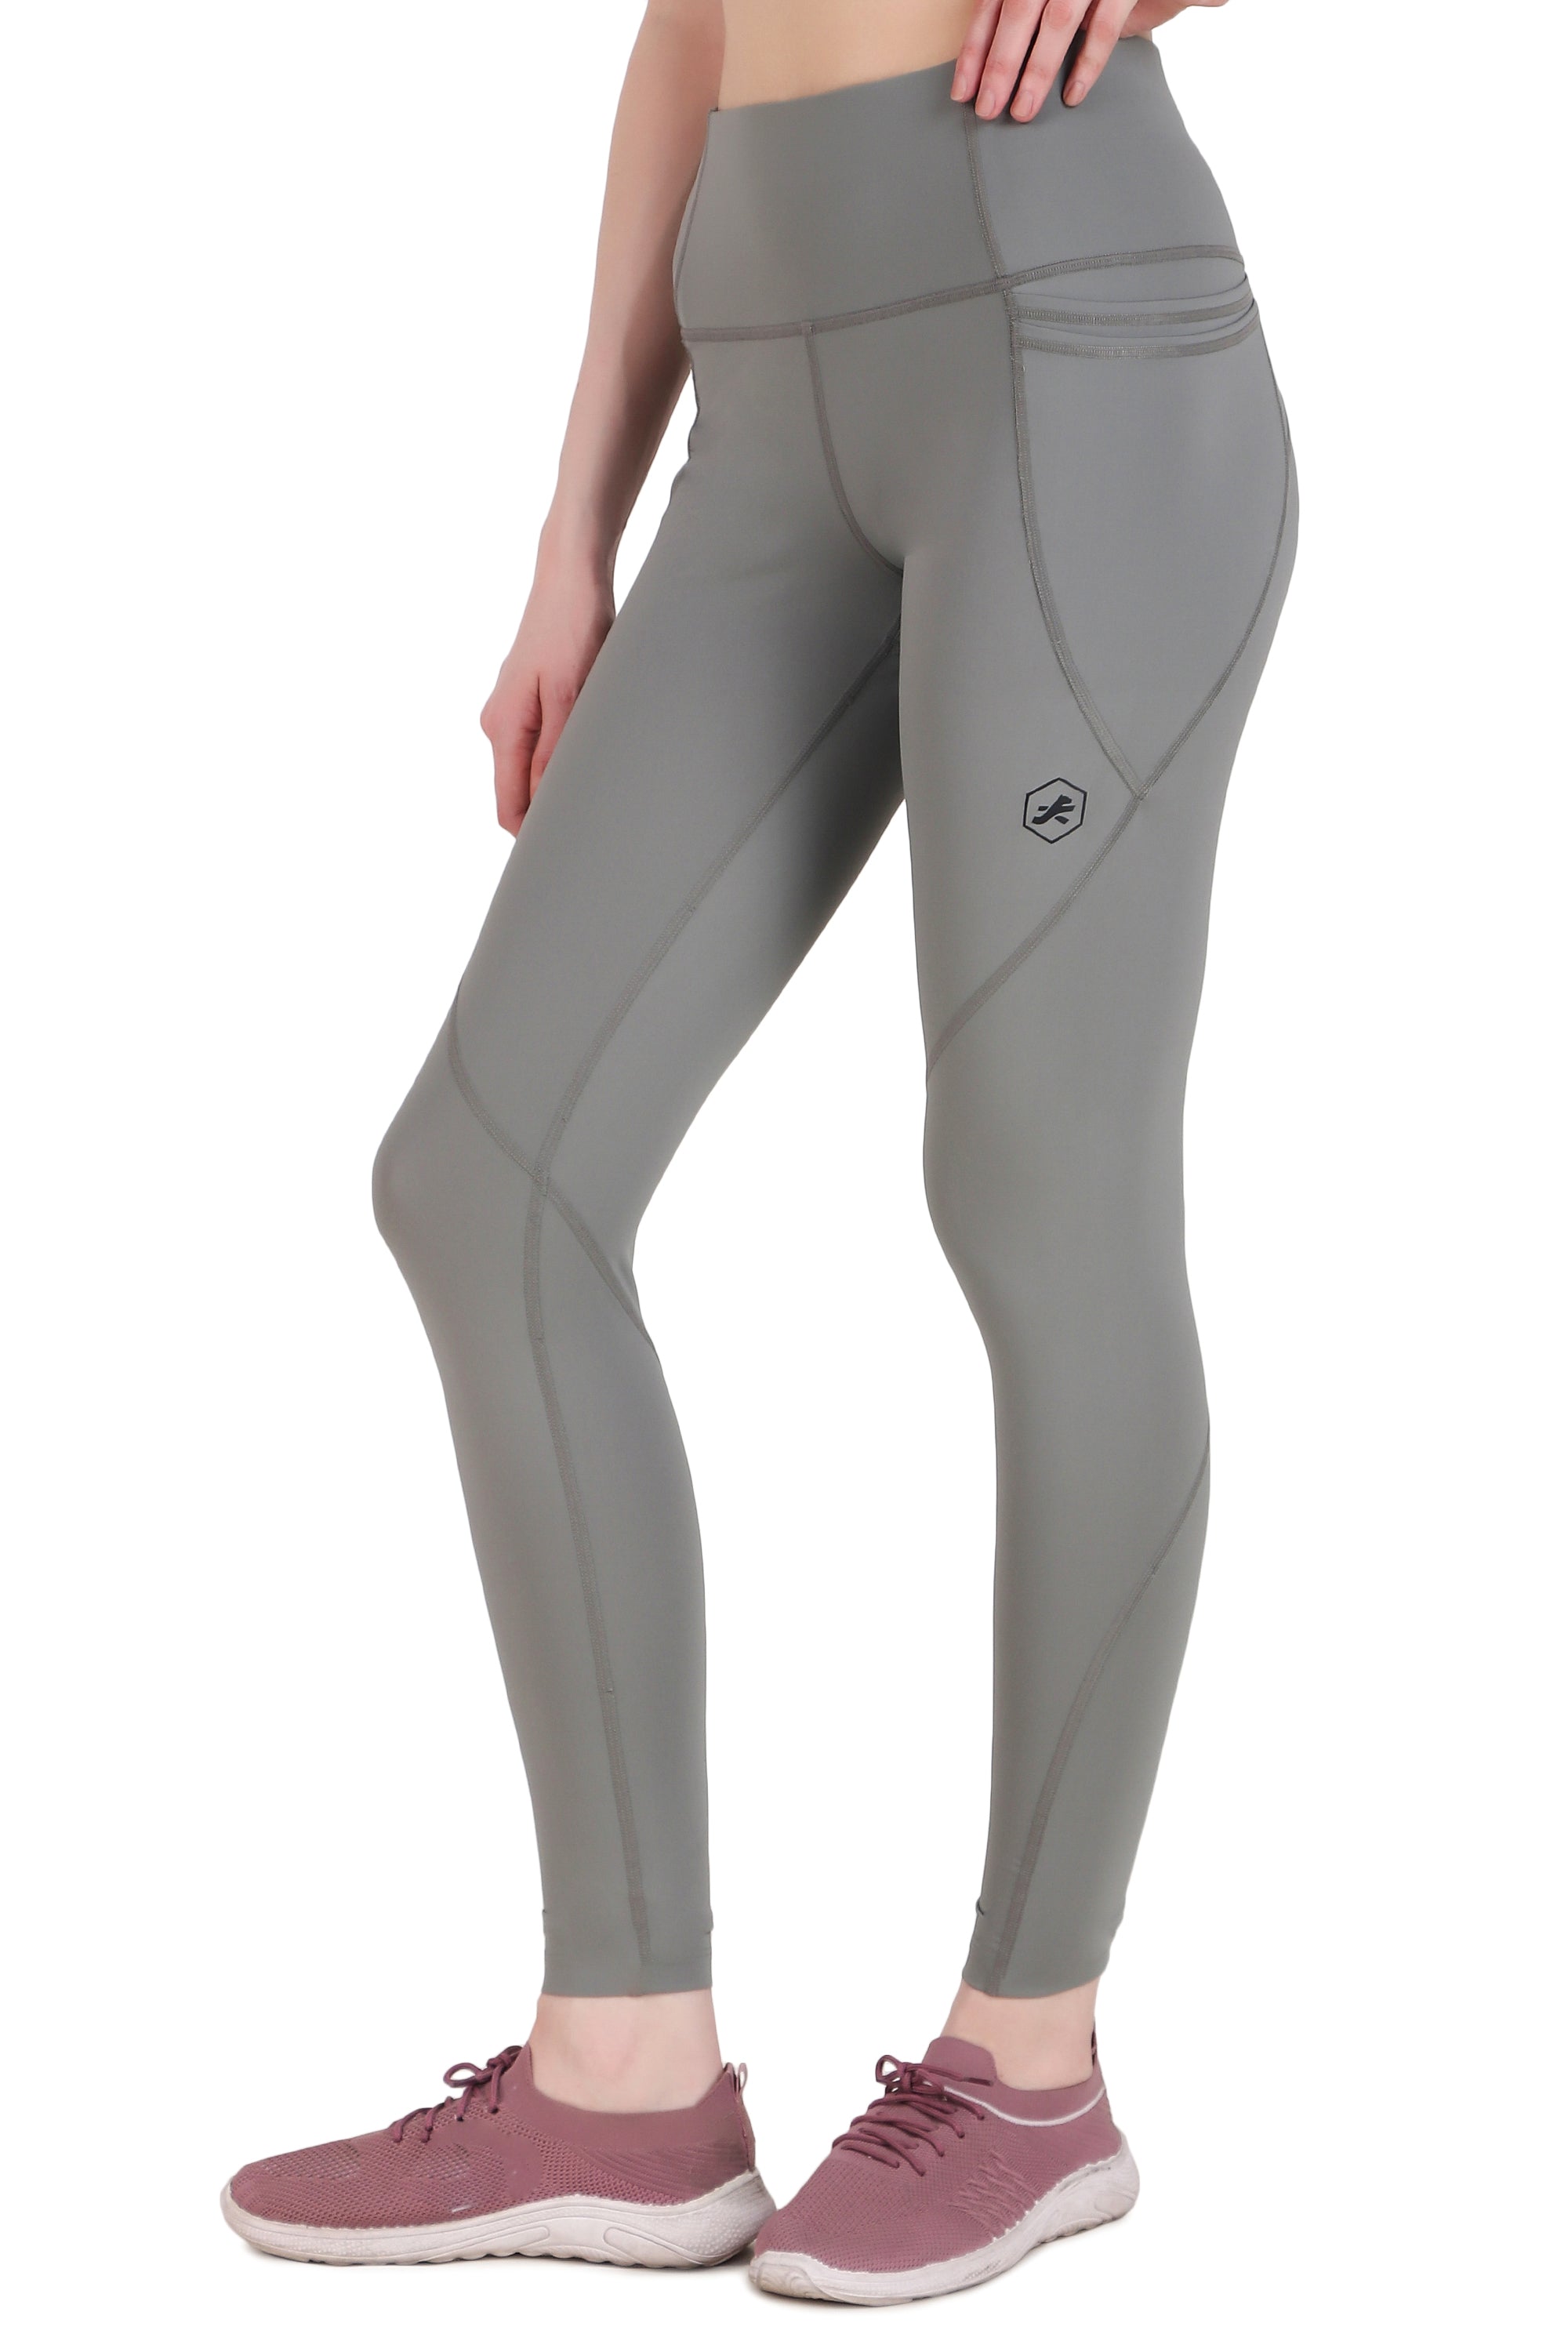 Nylon 4 Pocket Compression Legging/Tights For Women (Light Grey)